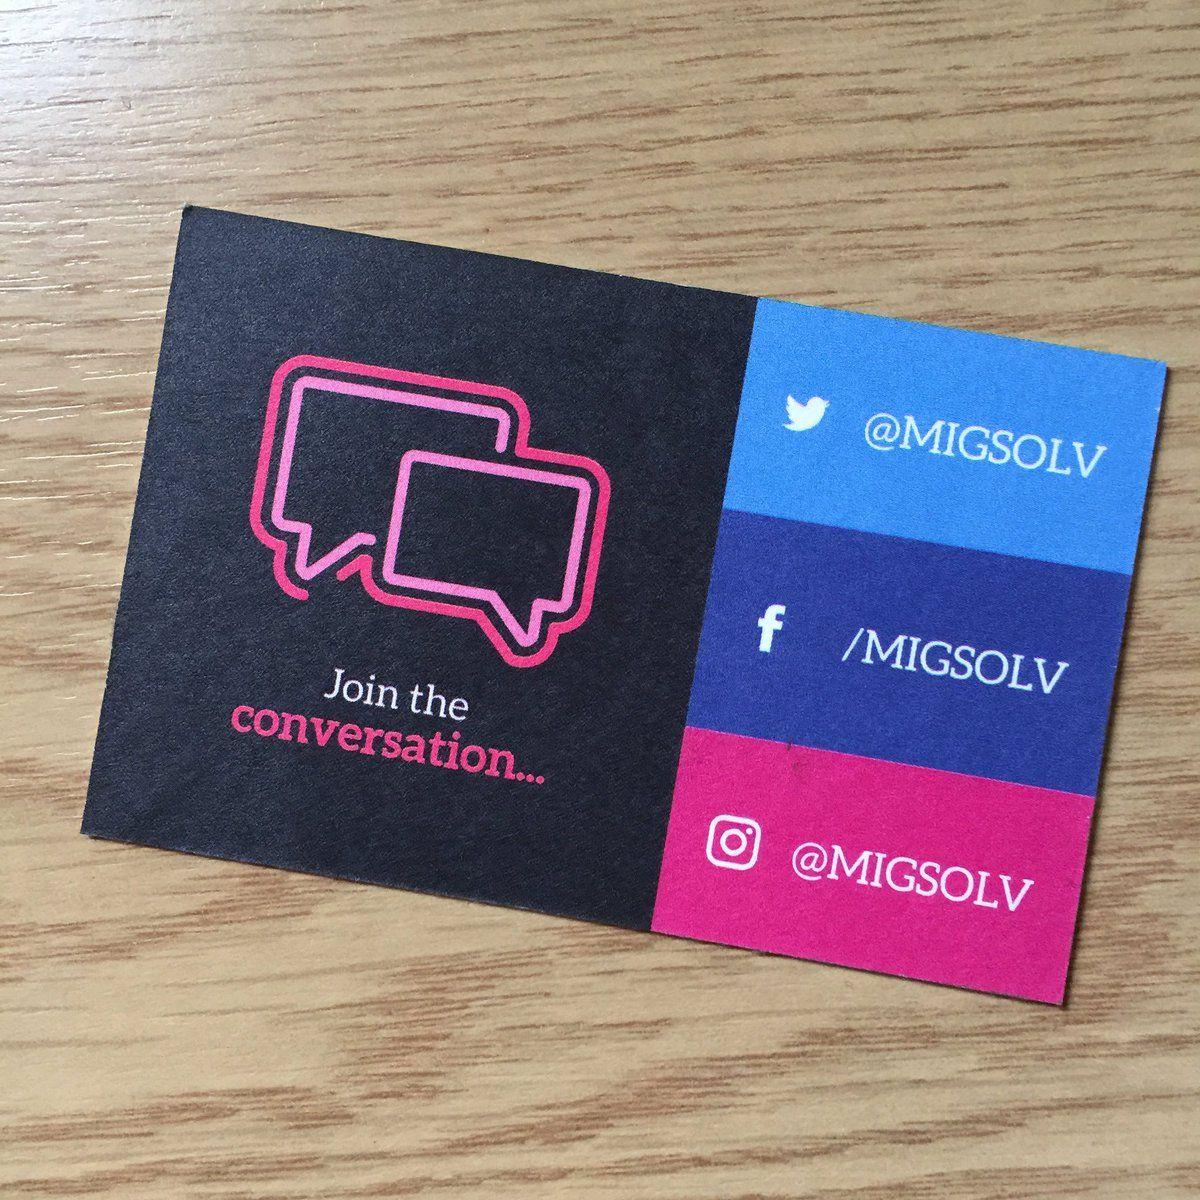 Facebook and Instagram for Business Card Logo - MIGSOLV new business cards have arrived! #MIGSOLV